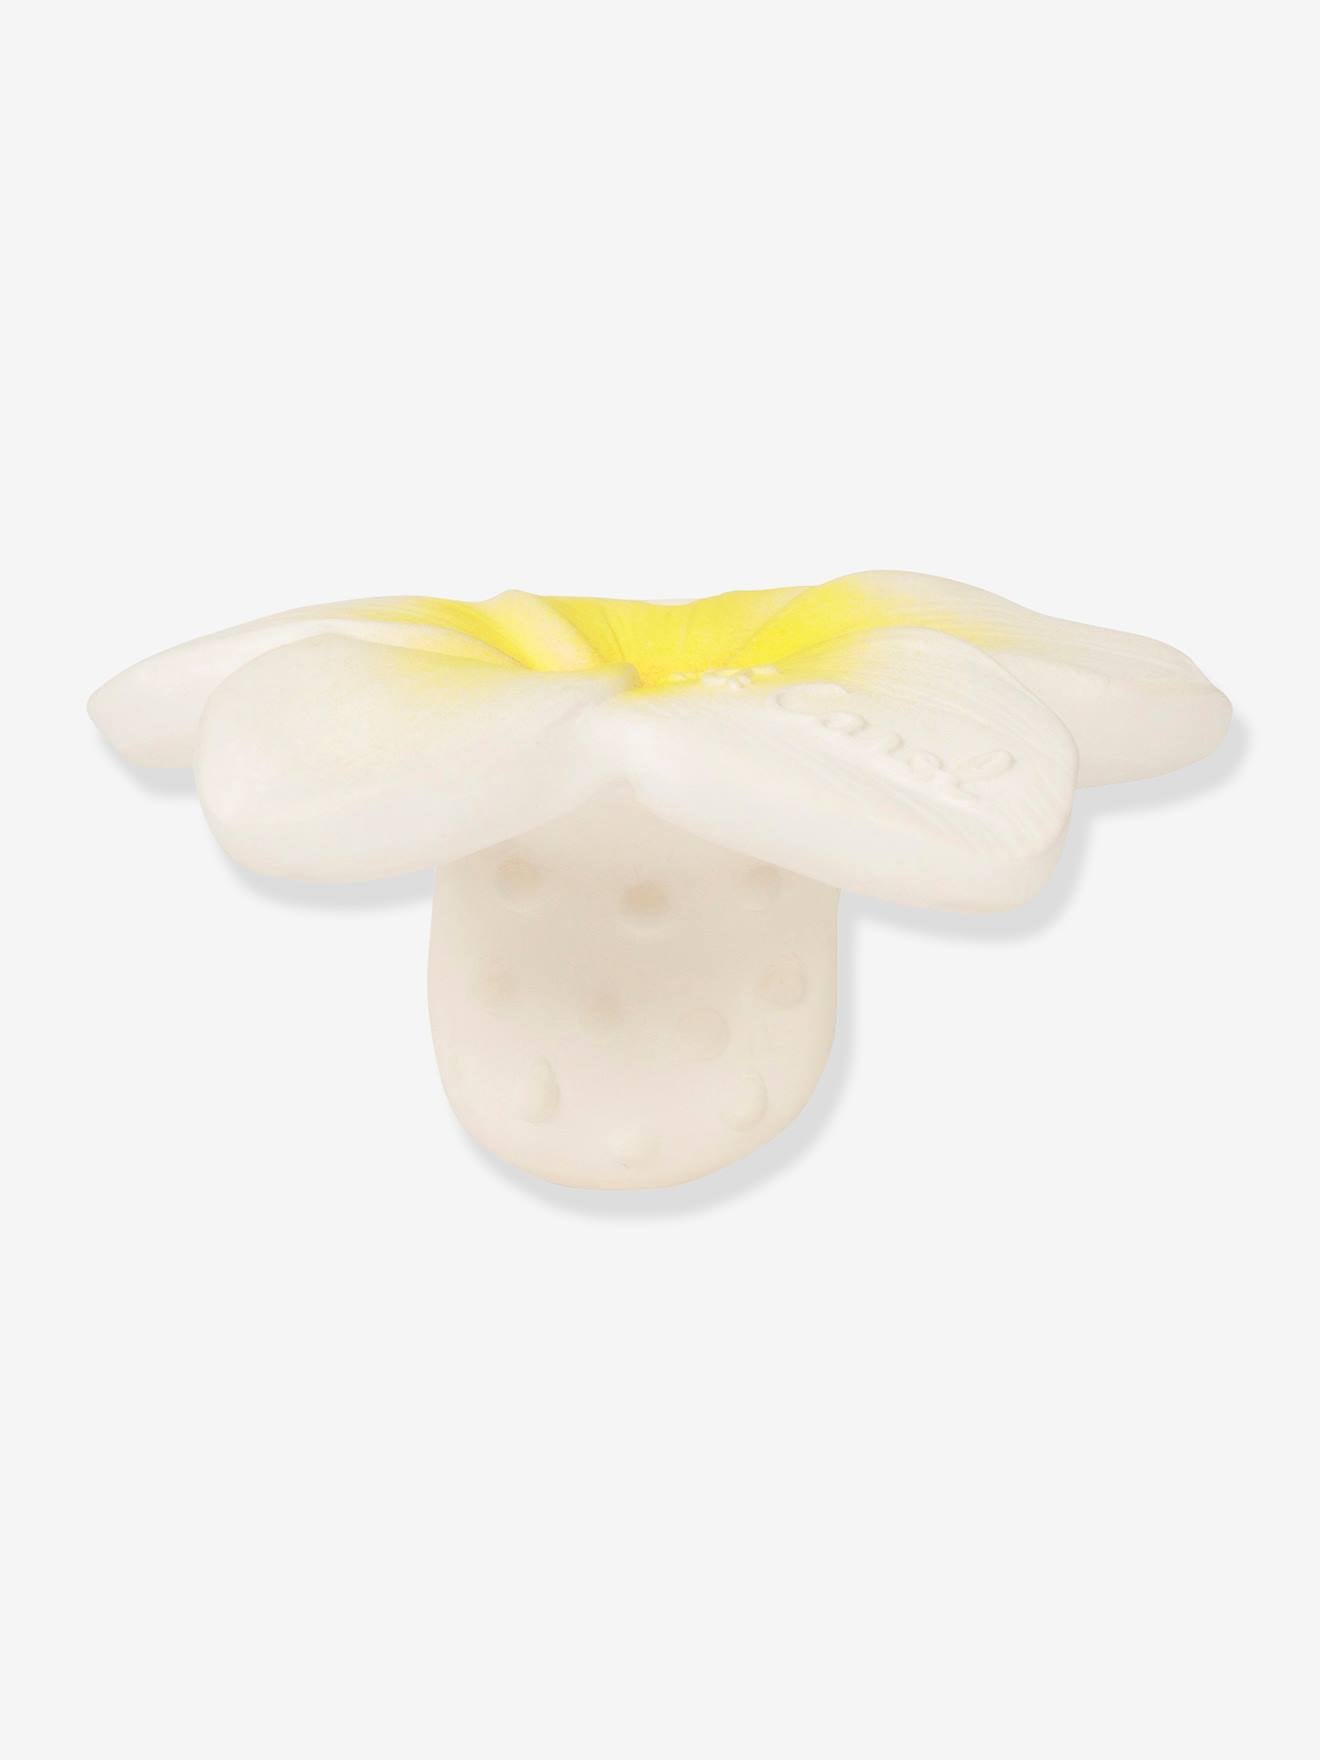 Mordedor -Oli&carol Hawaii, a Flor - branco